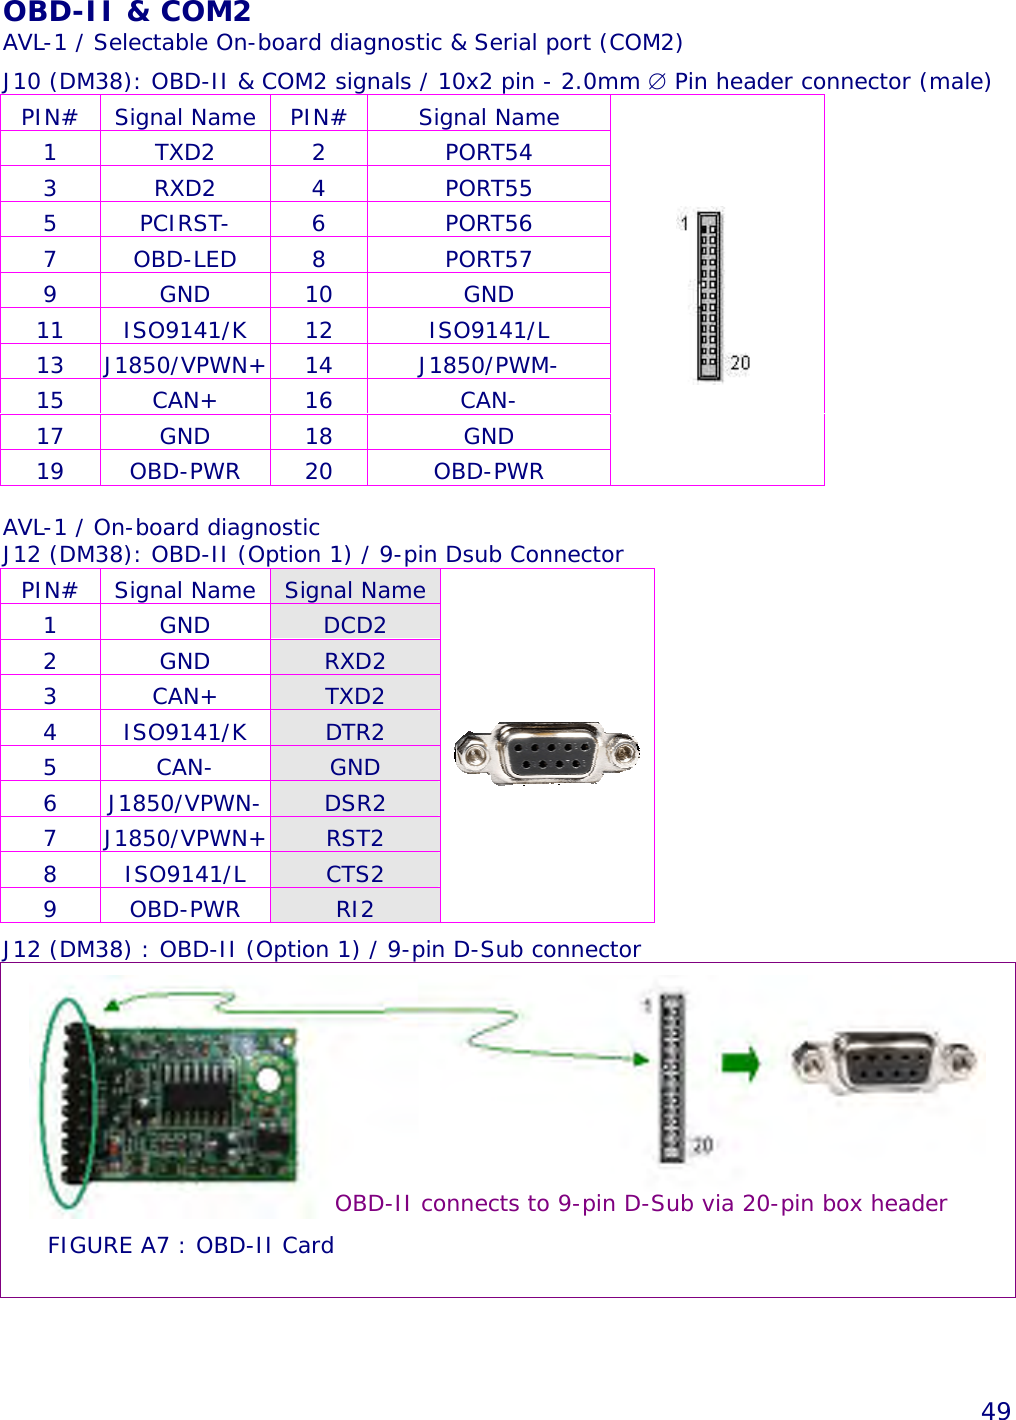   49 OBD-II &amp; COM2 AVL-1 / Selectable On-board diagnostic &amp; Serial port (COM2) J10 (DM38): OBD-II &amp; COM2 signals / 10x2 pin - 2.0mm ∅ Pin header connector (male) PIN# Signal Name PIN#  Signal Name 1 TXD2 2  PORT54 3 RXD2 4  PORT55 5 PCIRST- 6  PORT56 7 OBD-LED 8  PORT57 9 GND 10  GND 11 ISO9141/K 12  ISO9141/L 13 J1850/VPWN+ 14 J1850/PWM- 15 CAN+ 16  CAN- 17 GND 18  GND 19 OBD-PWR 20  OBD-PWR   AVL-1 / On-board diagnostic J12 (DM38): OBD-II (Option 1) / 9-pin Dsub Connector PIN# Signal Name Signal Name 1 GND  DCD2 2 GND  RXD2 3 CAN+  TXD2 4 ISO9141/K  DTR2 5 CAN-  GND 6 J1850/VPWN-  DSR2 7 J1850/VPWN+ RST2 8 ISO9141/L  CTS2 9 OBD-PWR  RI2 J12 (DM38) : OBD-II (Option 1) / 9-pin D-Sub connector  FIGURE A7 : OBD-II Card   OBD-II connects to 9-pin D-Sub via 20-pin box header 